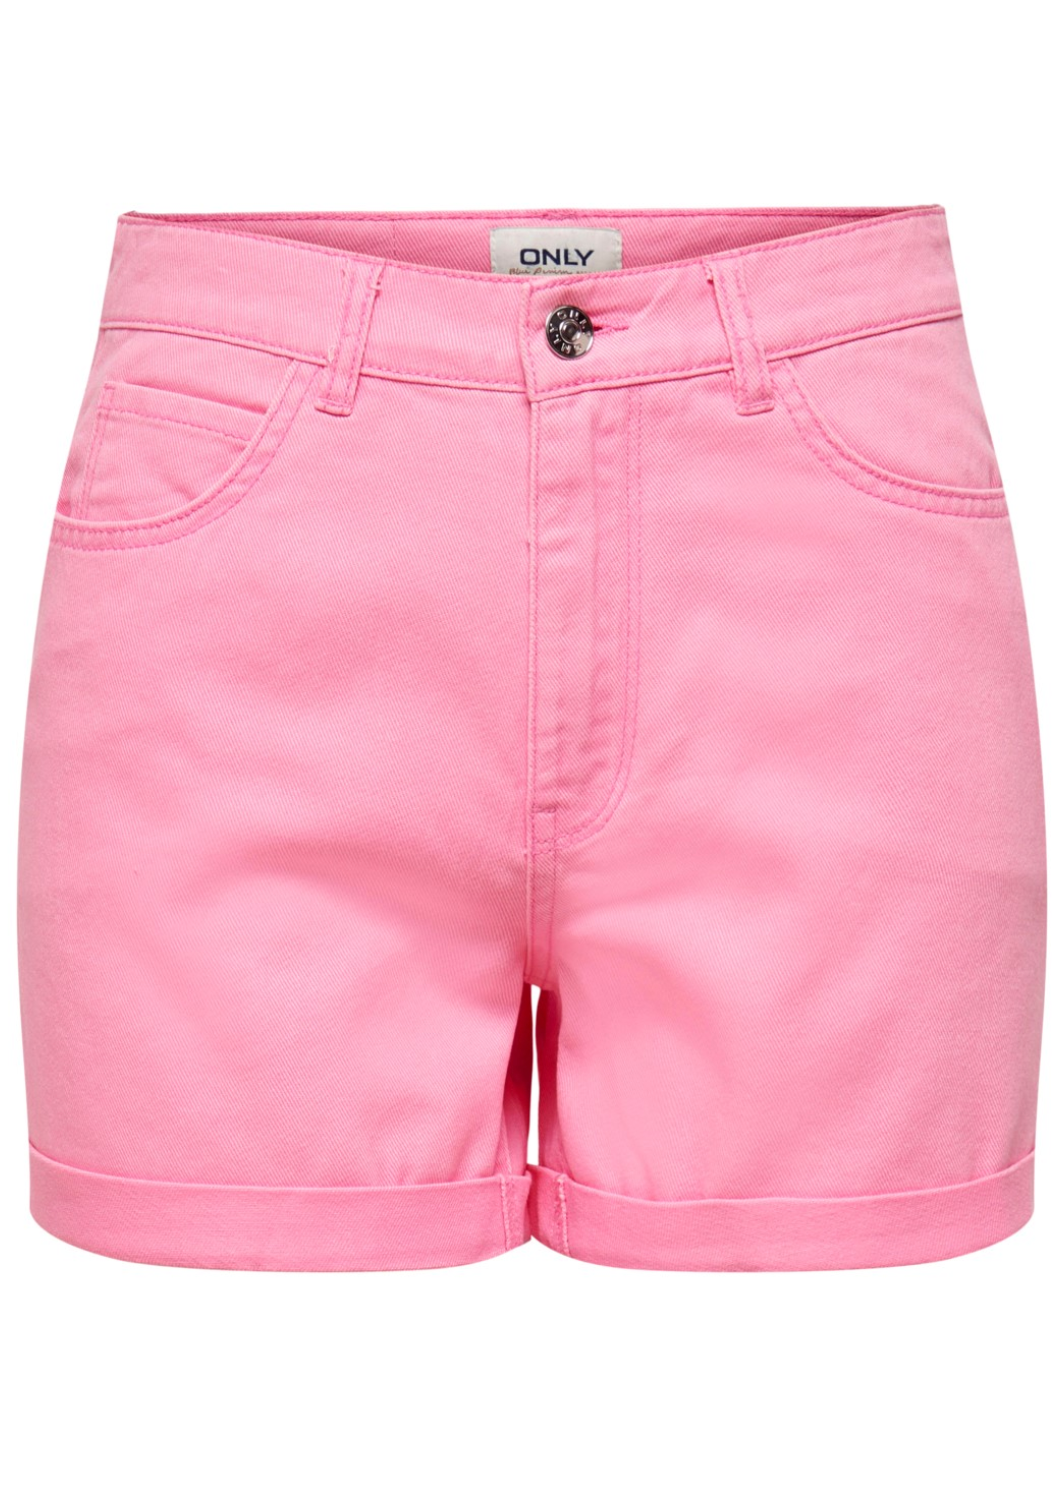 Vega Pink Shorts SALE